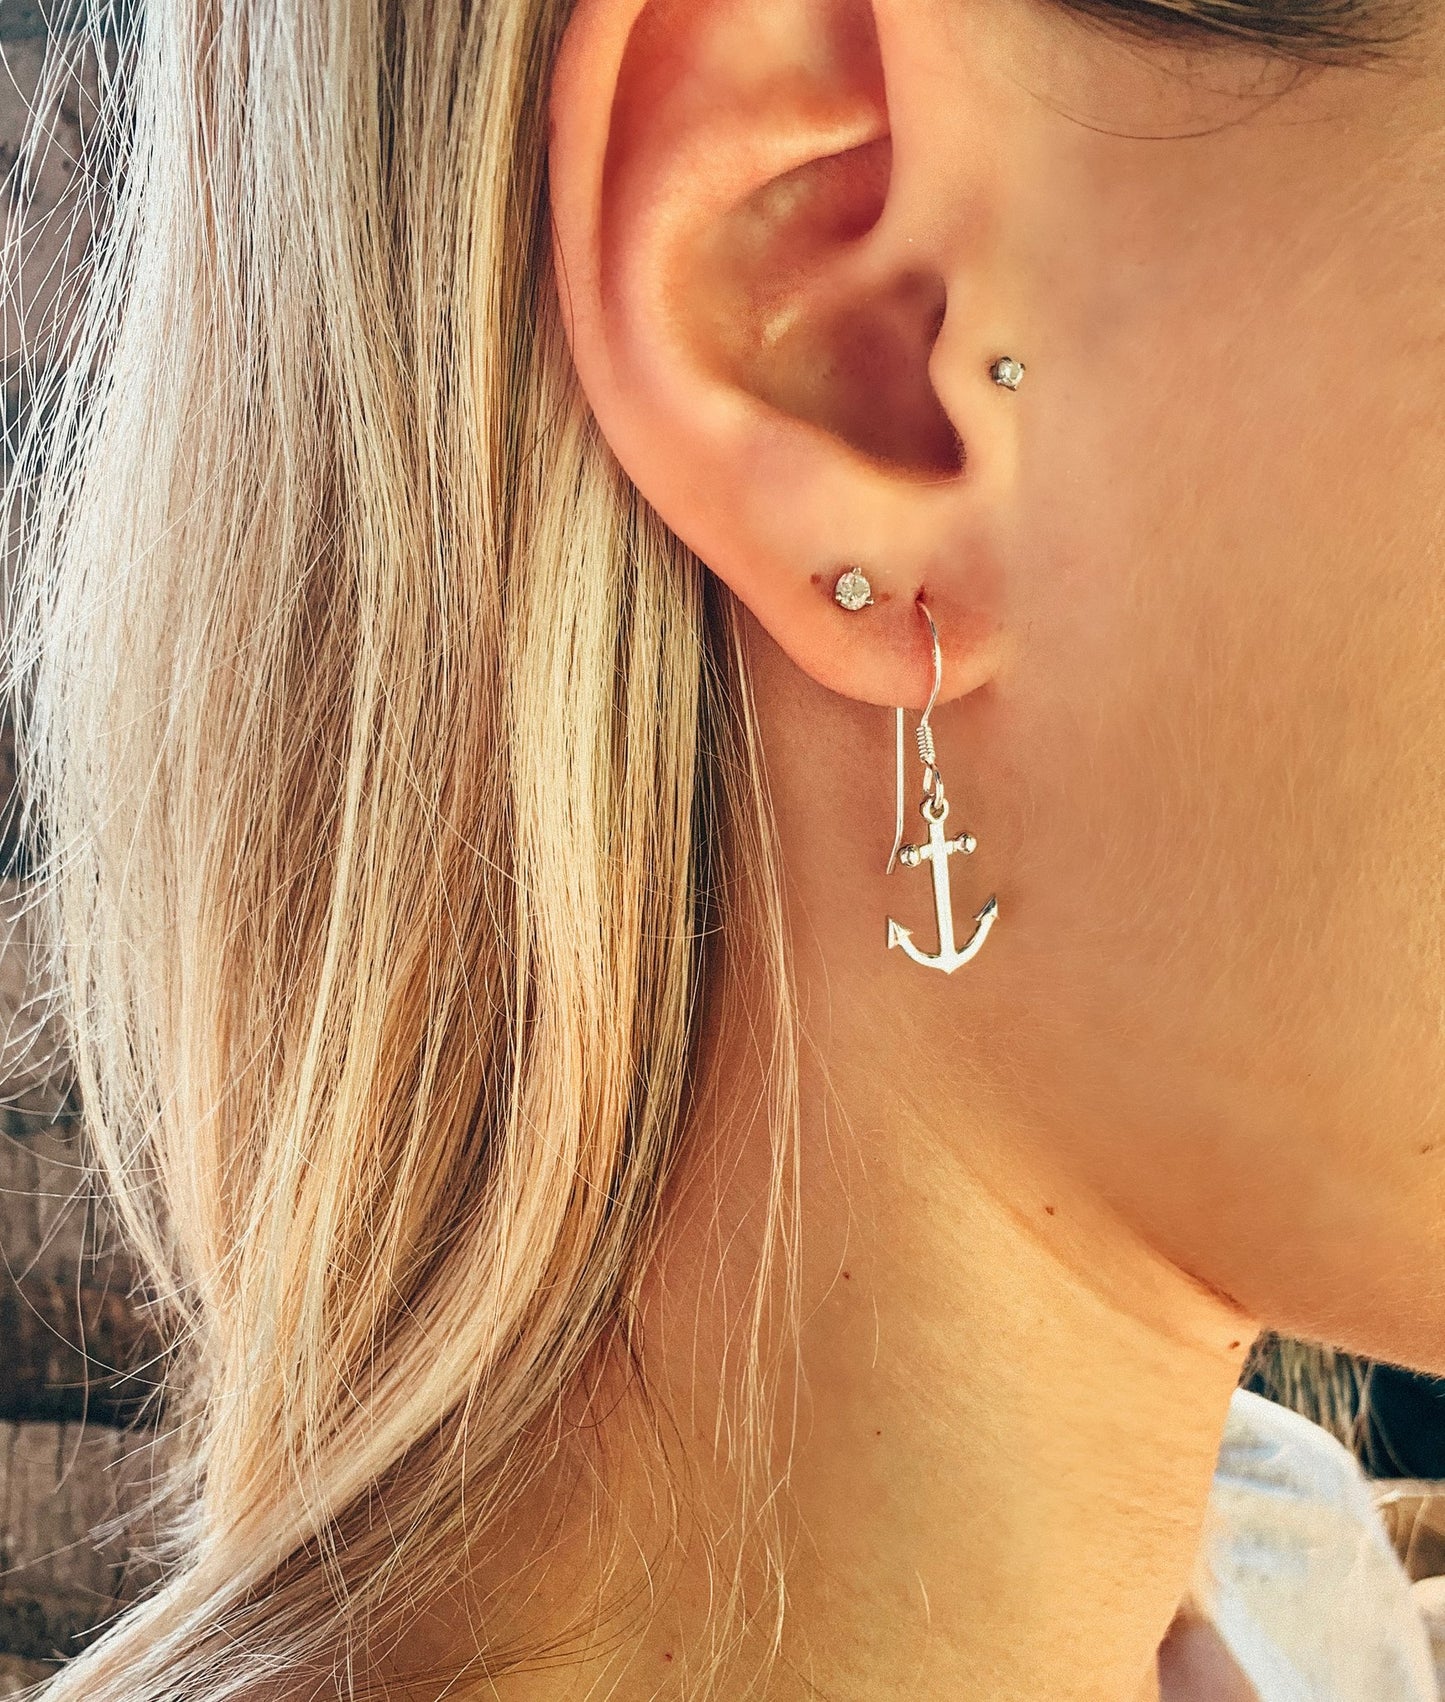 Anchor Dangle Earrings (Medium Size)